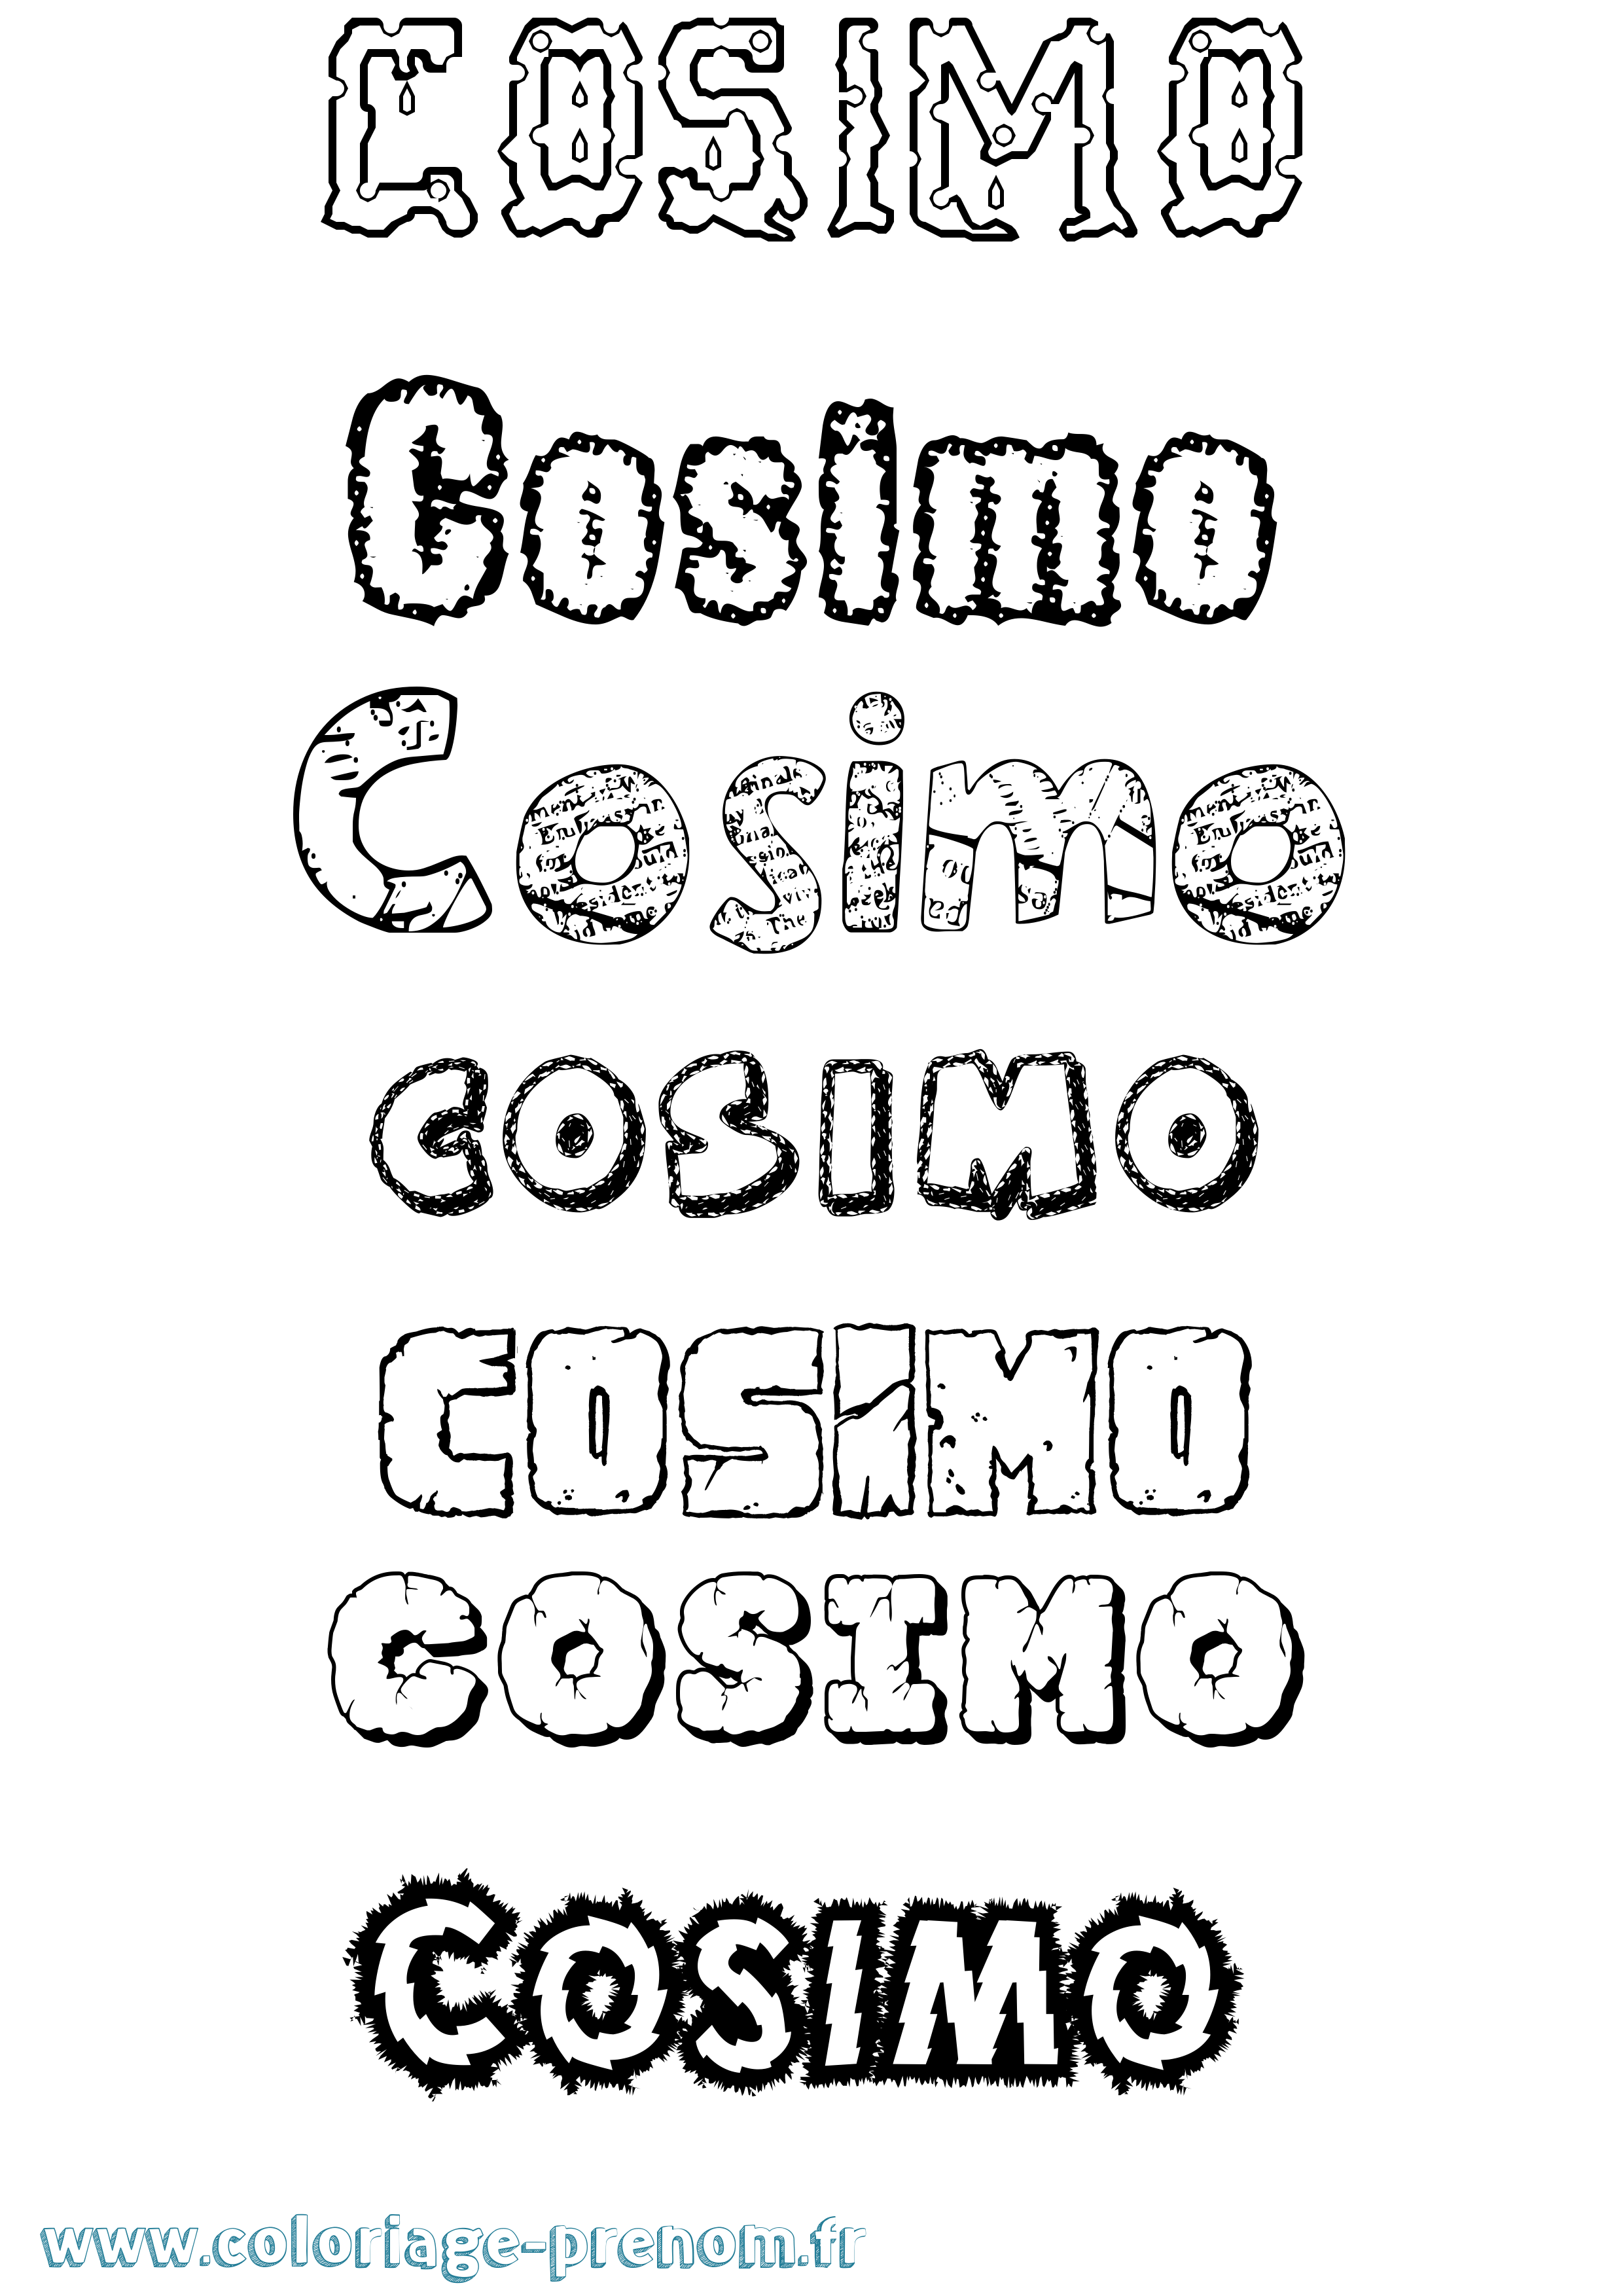 Coloriage prénom Cosimo Destructuré